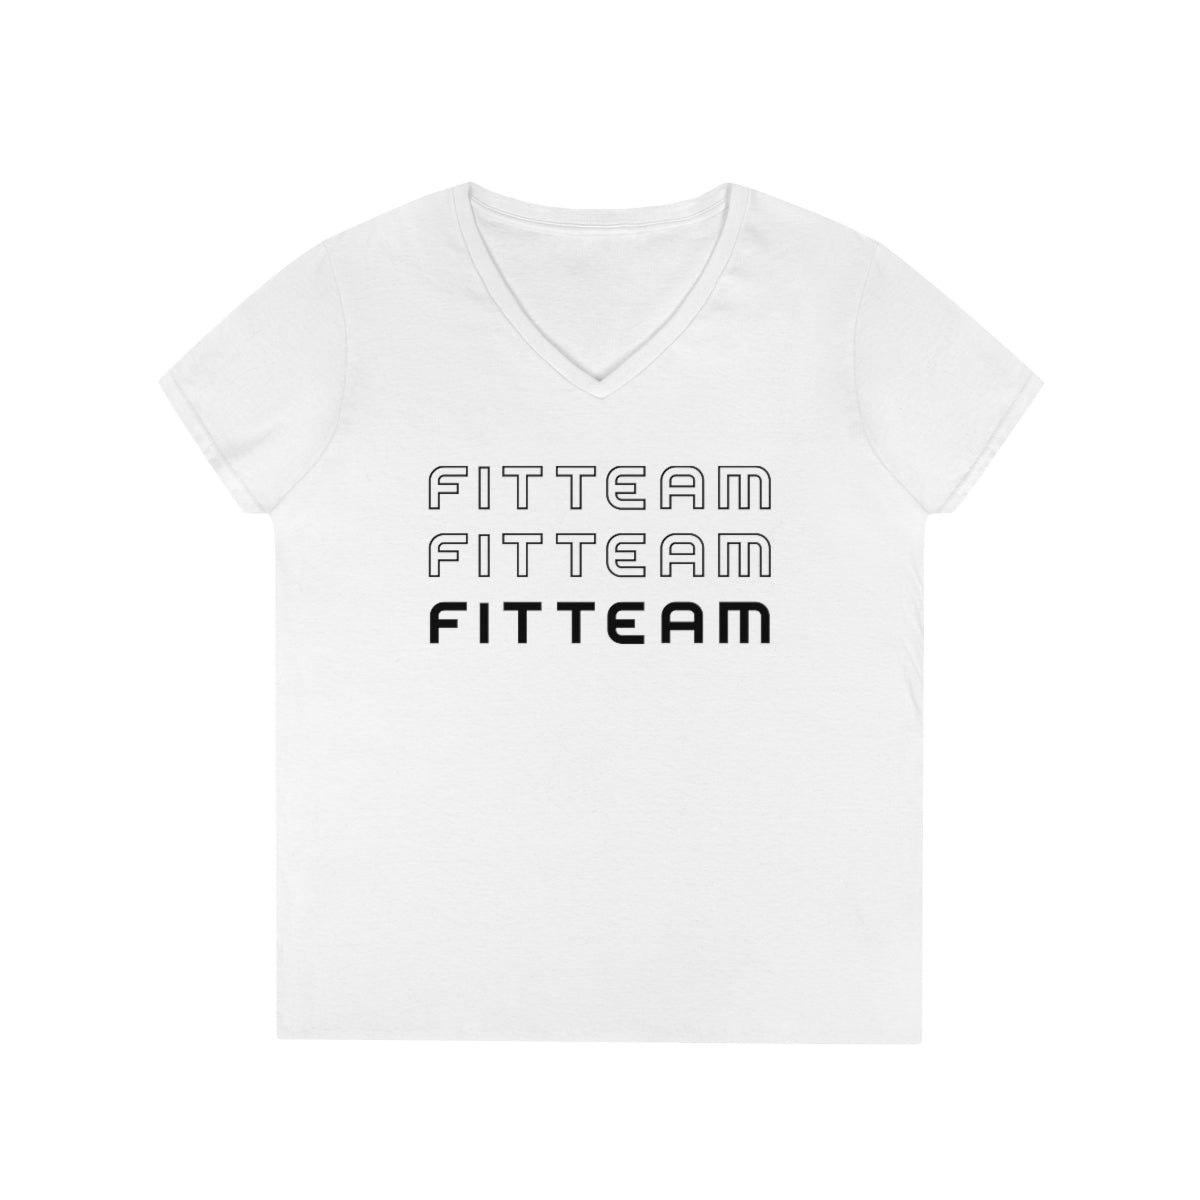 FITTEAM Ladies' V-Neck T-Shirt